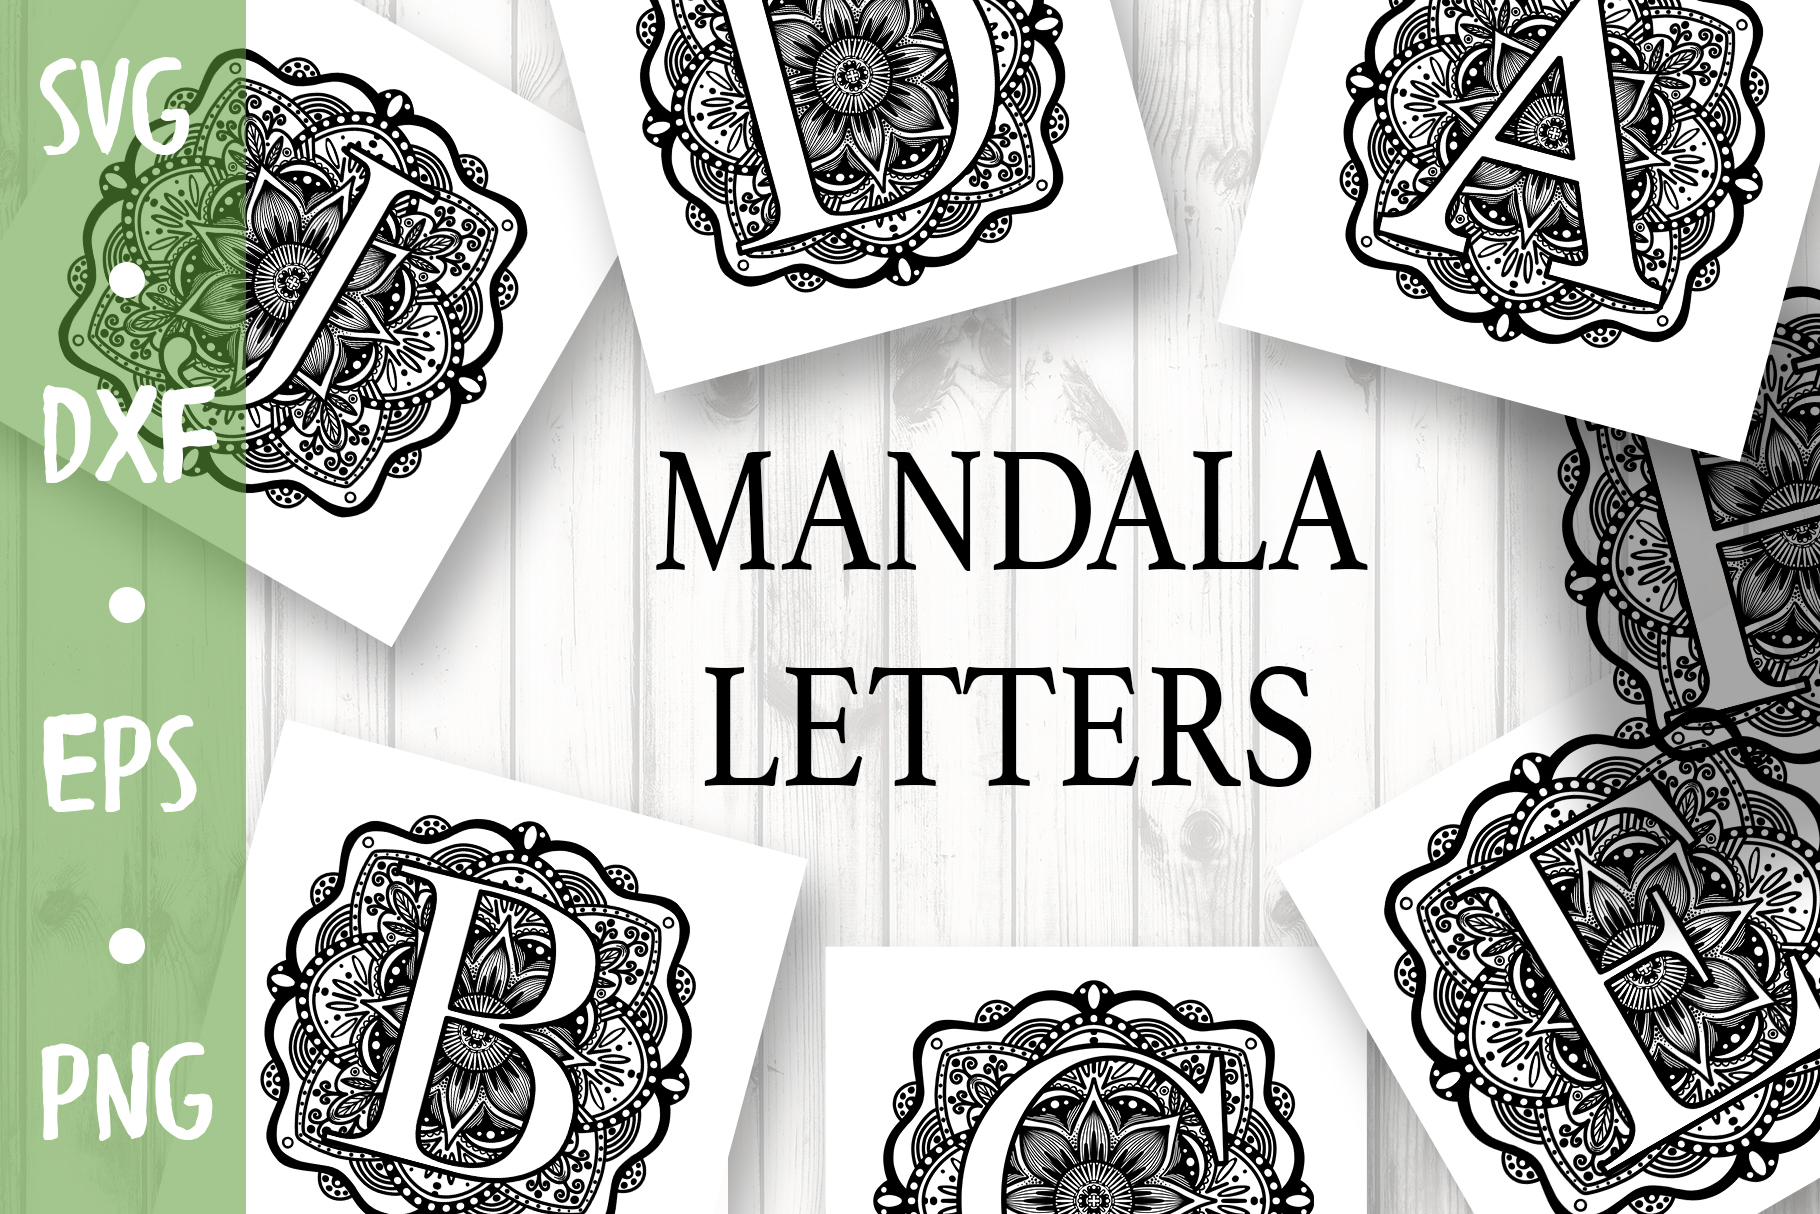 Download Mandala letters - SVG CUT FILES